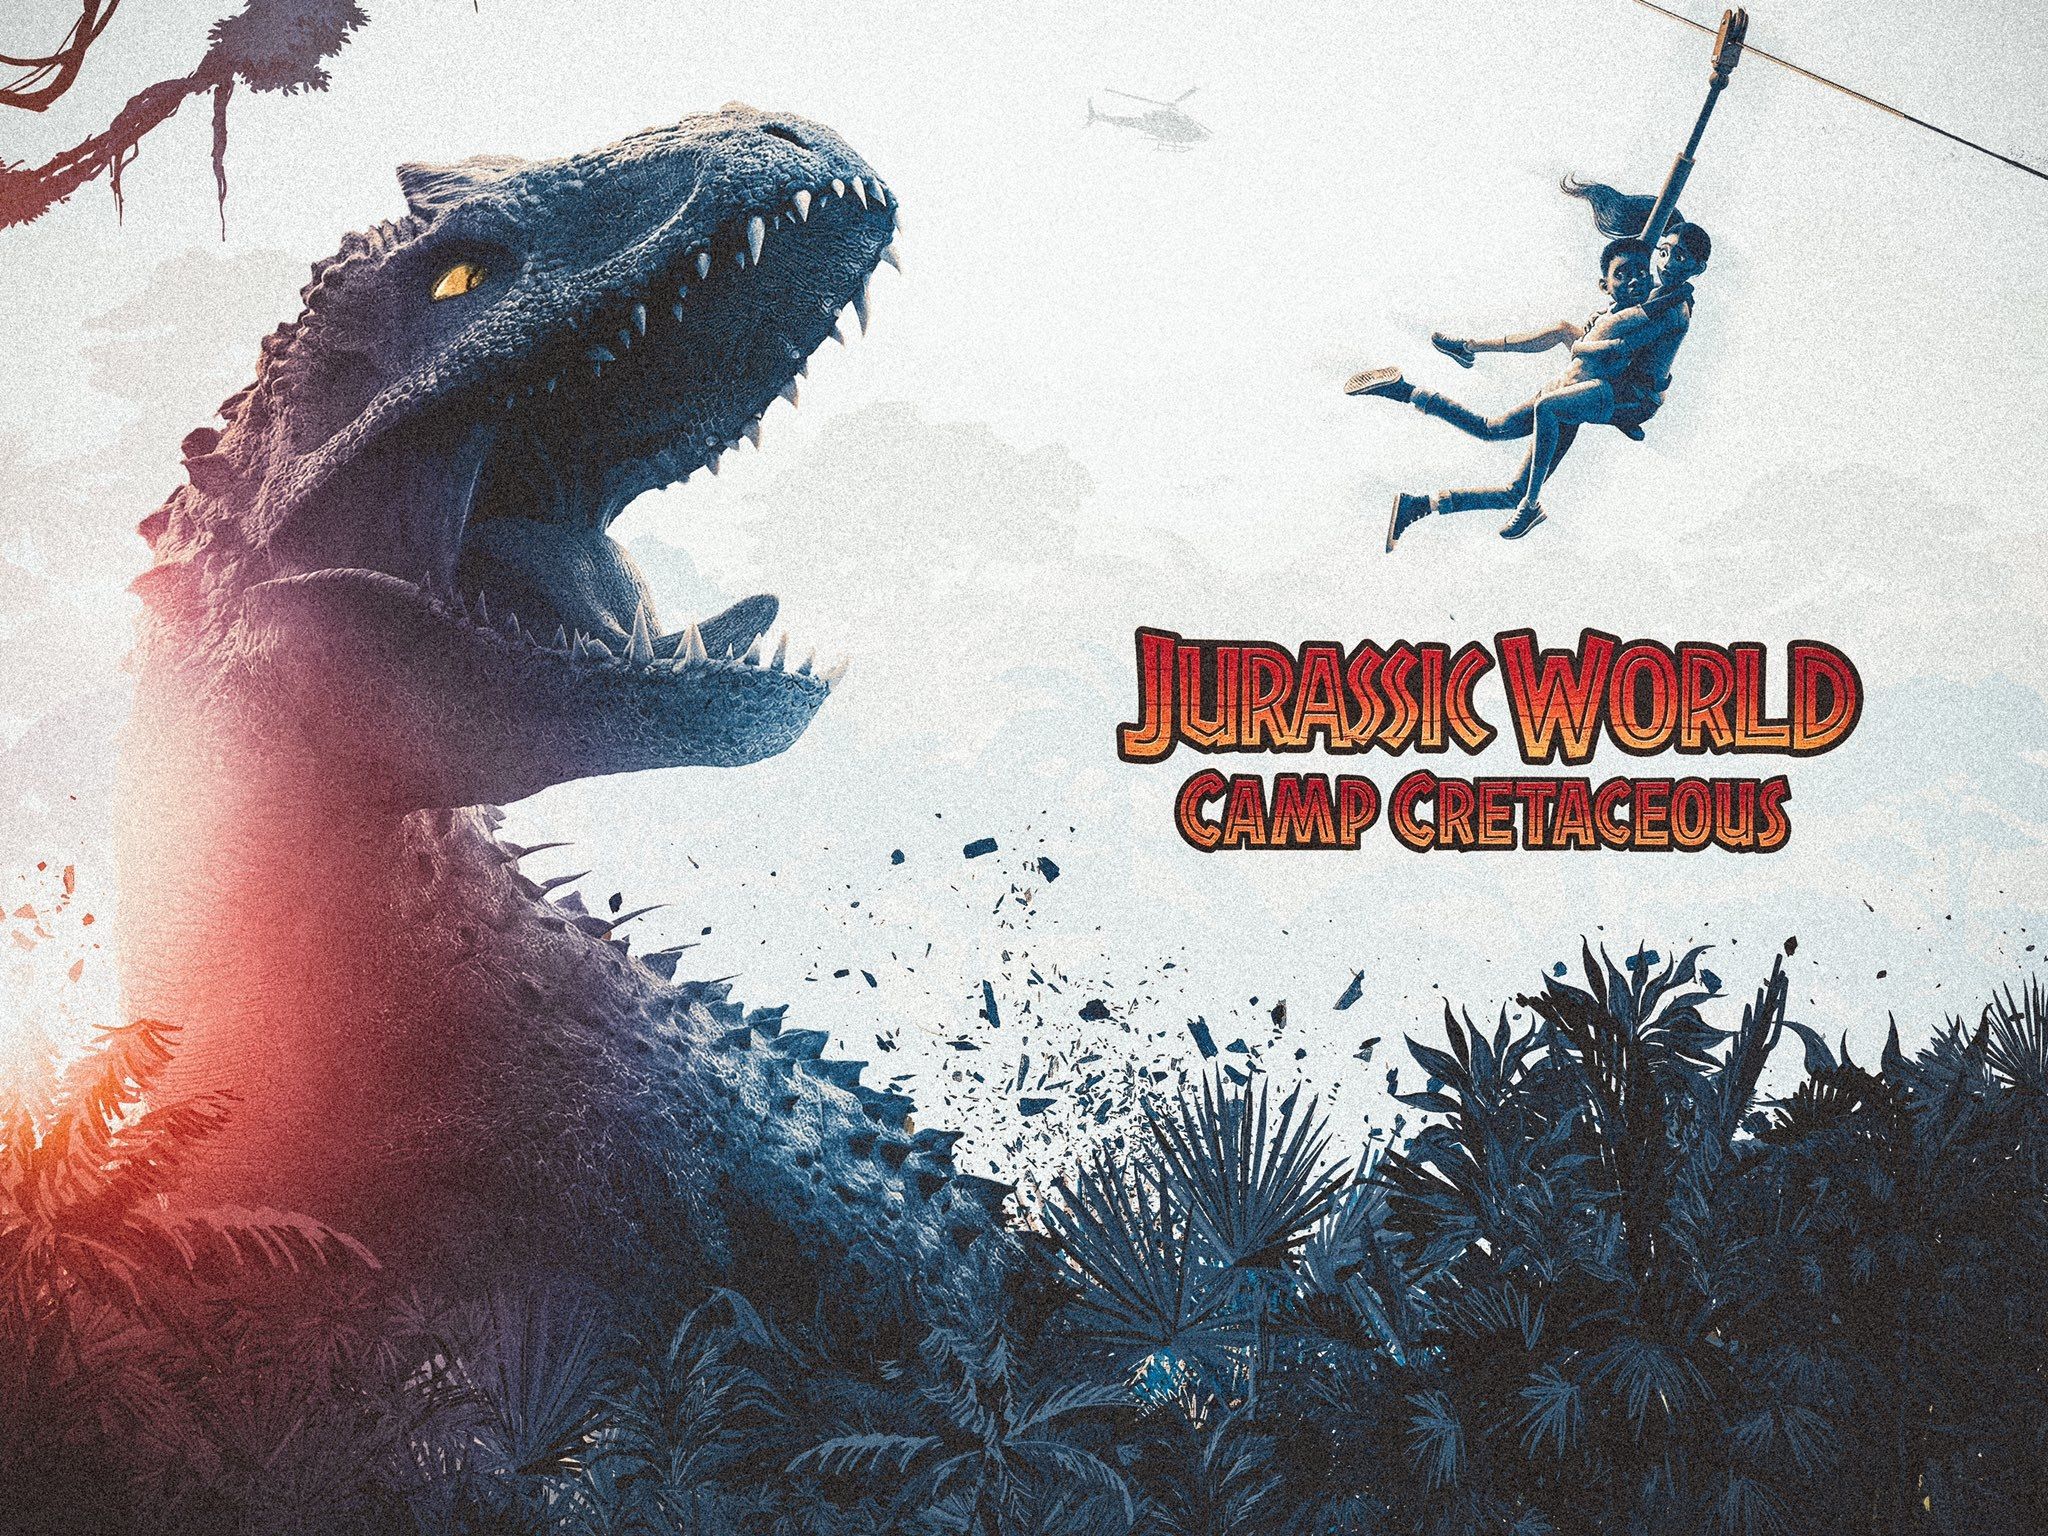 Jurassic World: Dominion download the new version